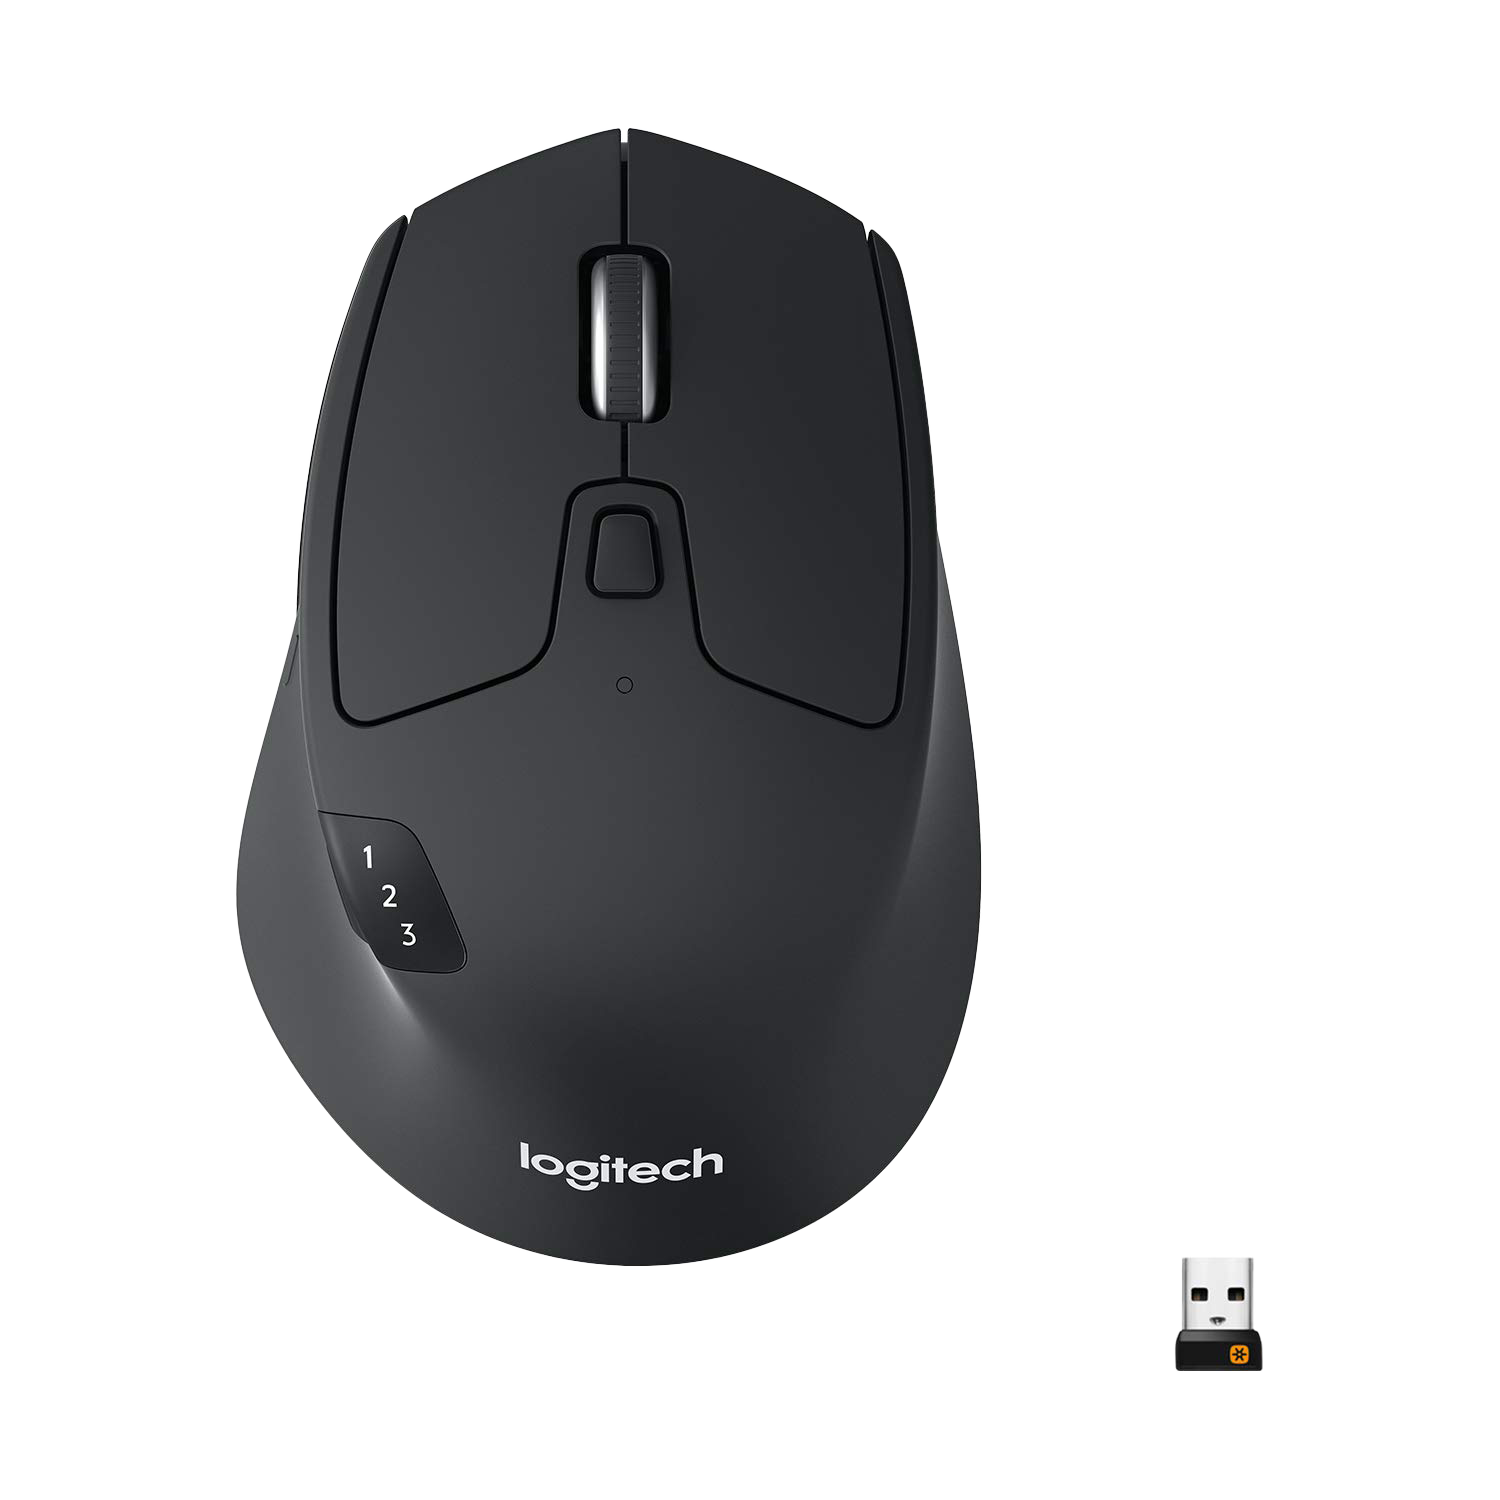 Logitech M720 Triathlon Wireless Mouse with receiver